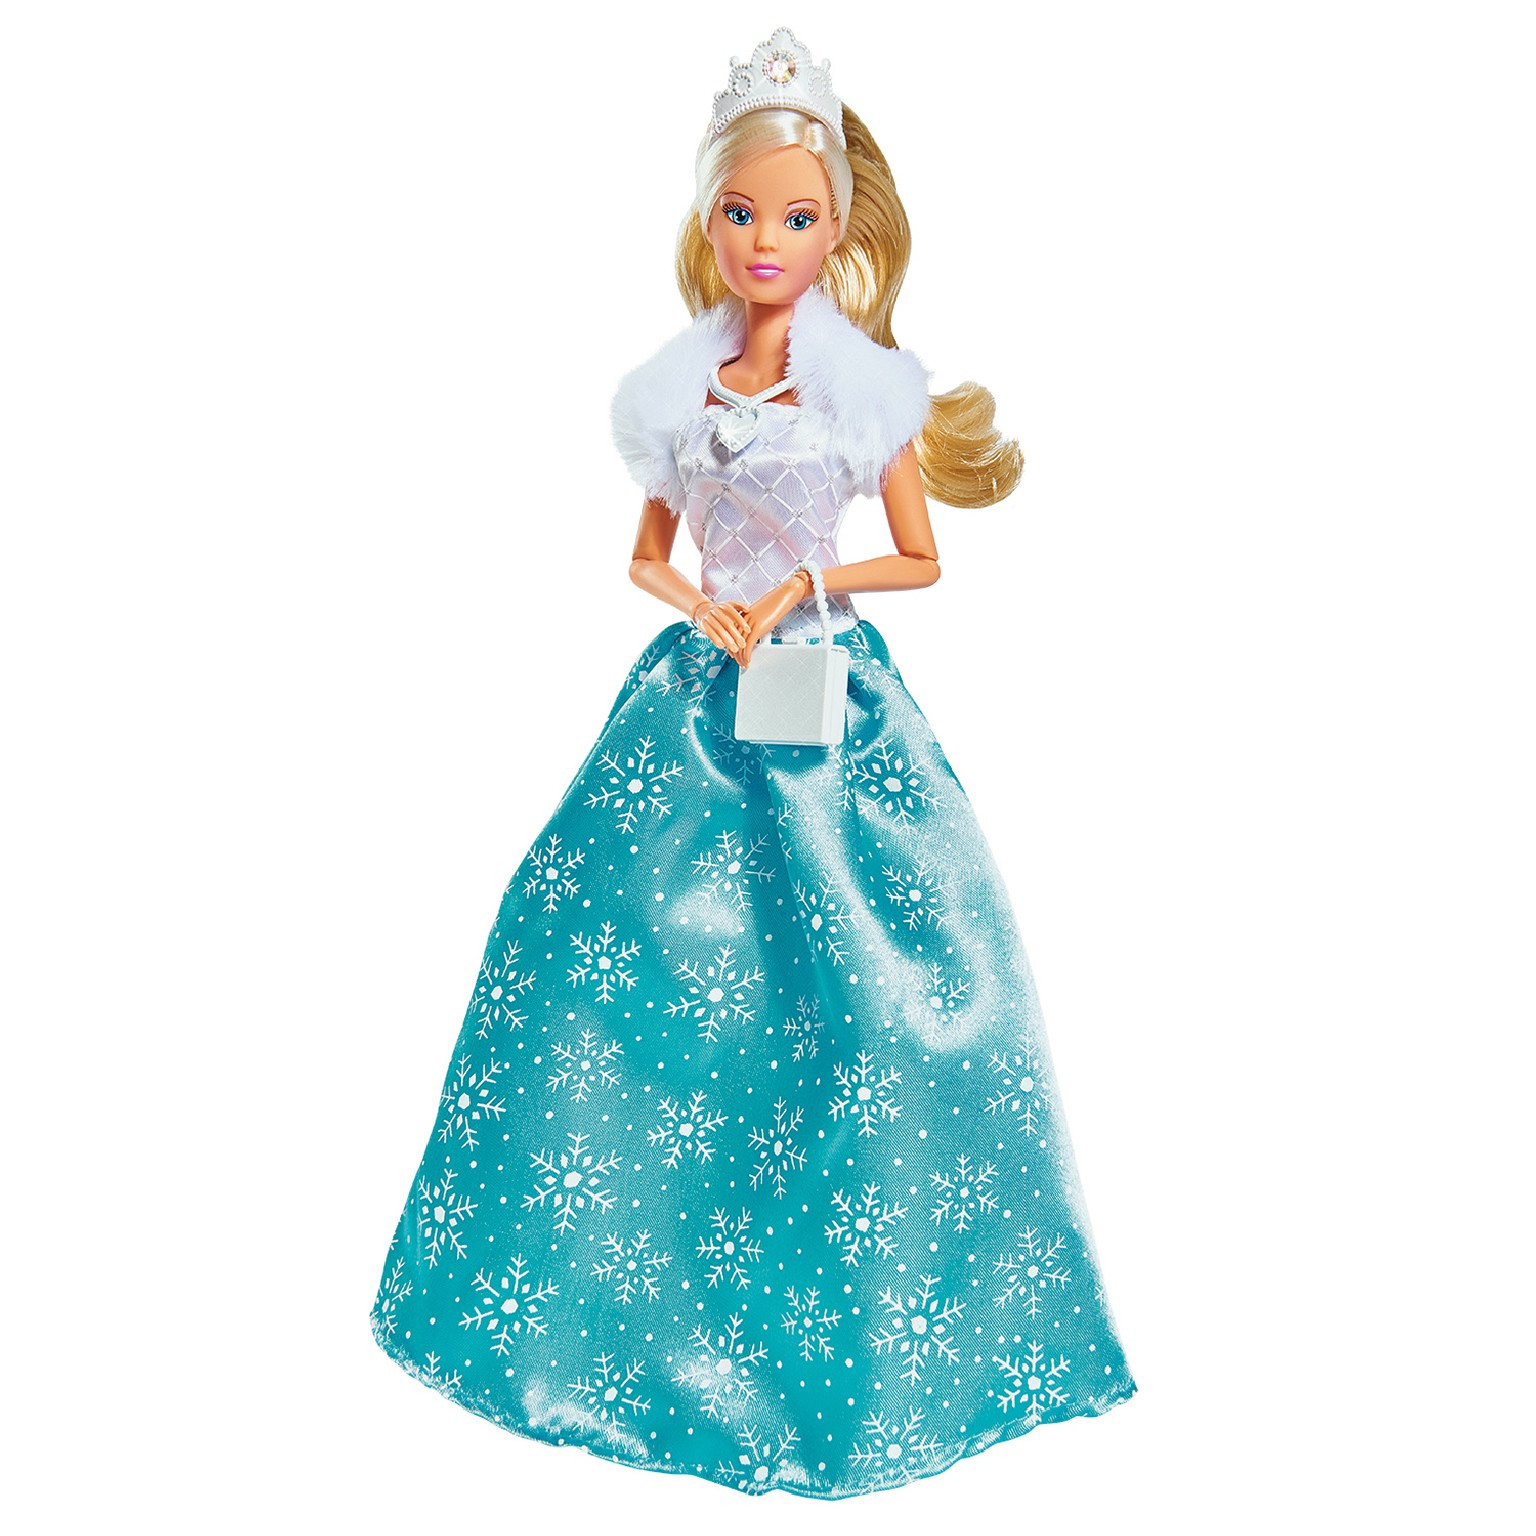 Steffi Ice Princess dress